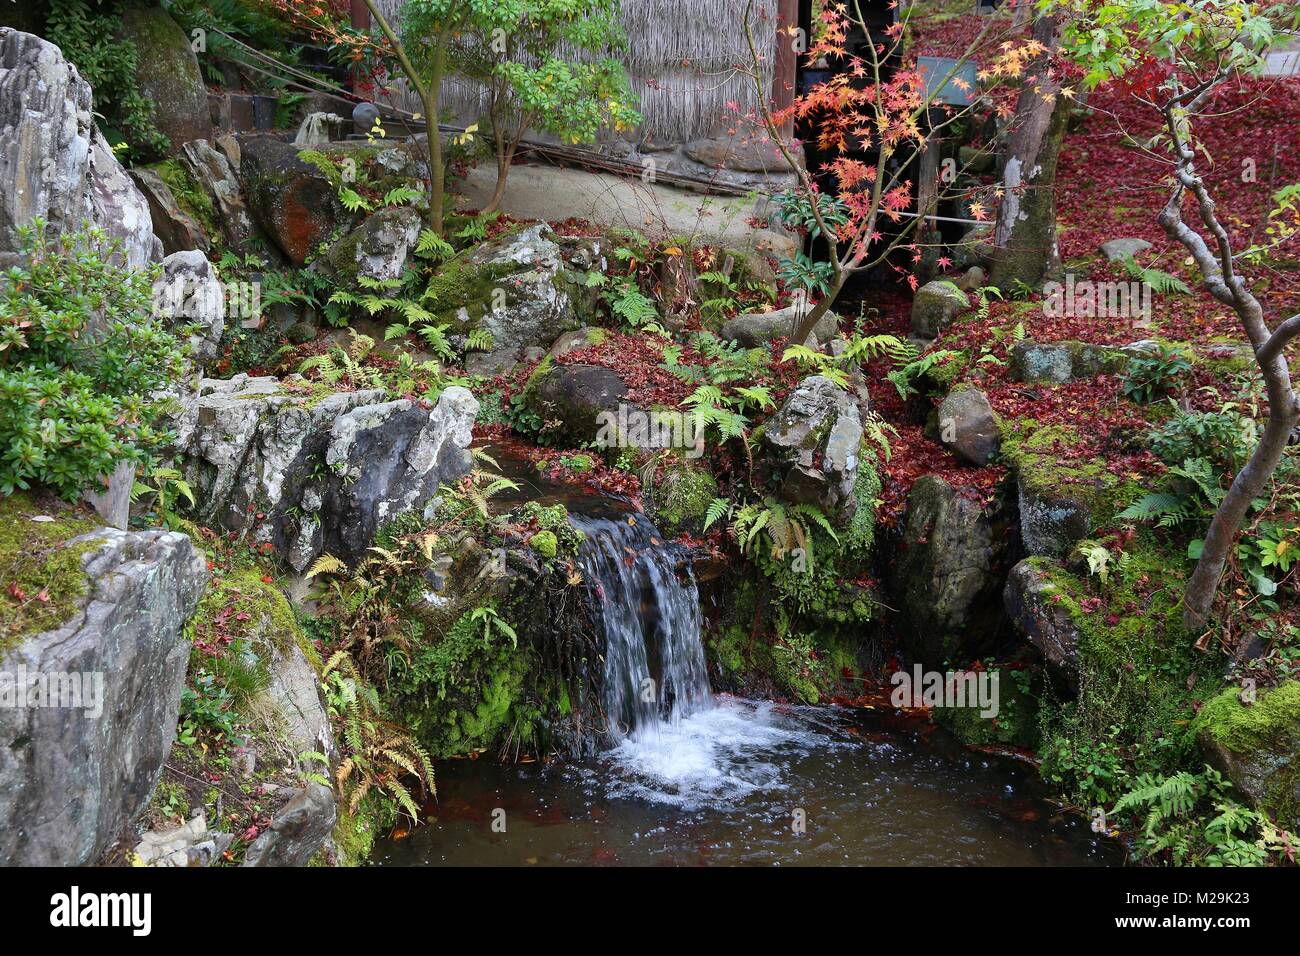 Traditional Japanese garden - Isuien Garden of Nara, Japan. Stock Photo